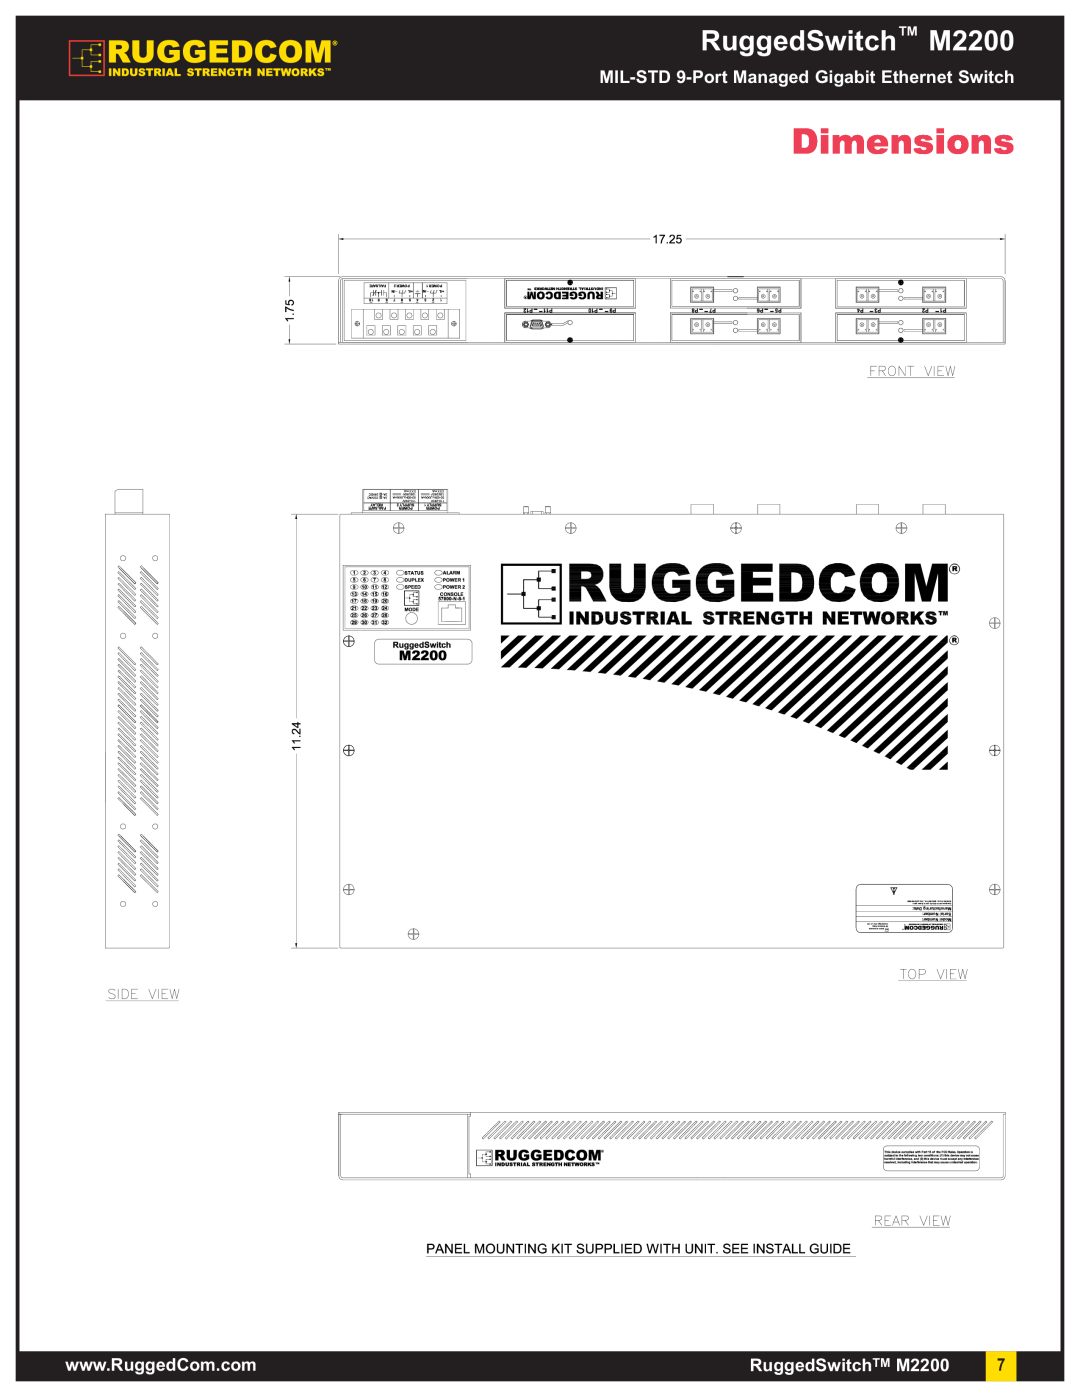 RuggedCom m2200 manual Dimensions, RuggedSwitch M2200, MIL-STD 9-Port Managed Gigabit Ethernet Switch, RuggedSwitchTM M2200 